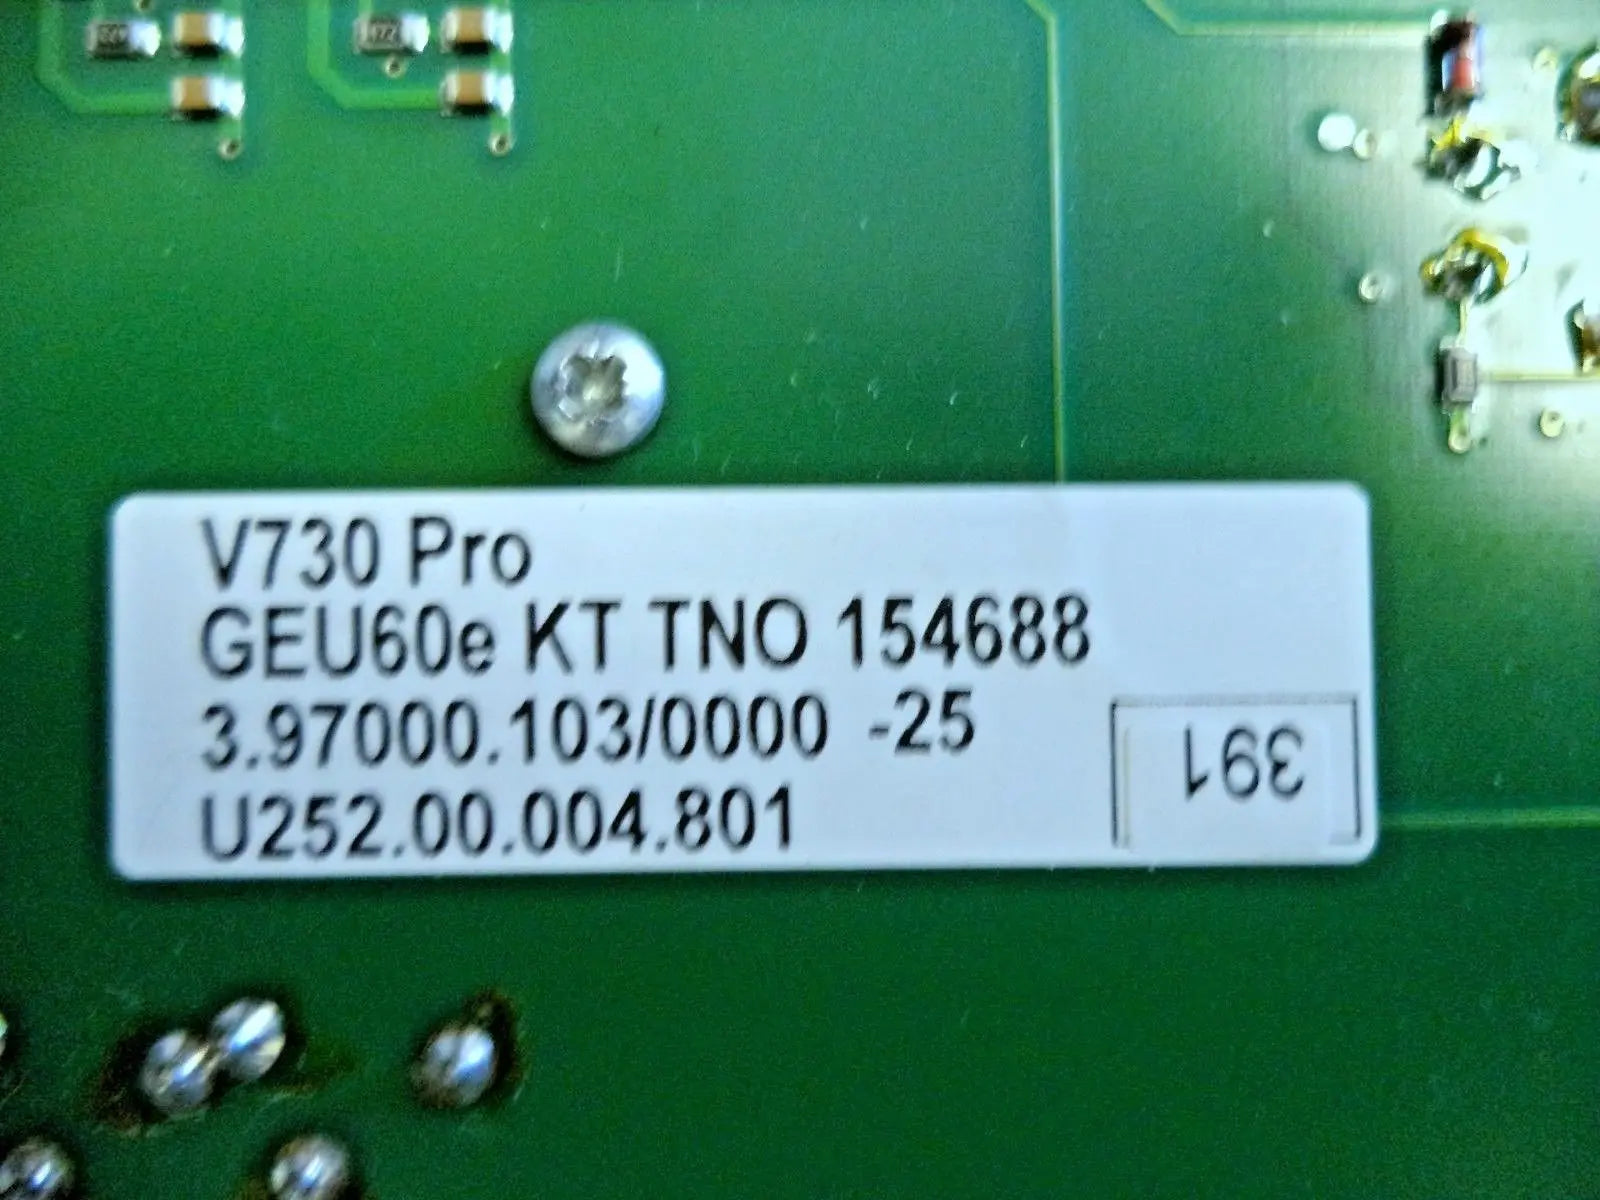 GE Voluson 730 Pro Ultrasound GEU60e (User Interface) Board (PN: KTZ154688) DIAGNOSTIC ULTRASOUND MACHINES FOR SALE